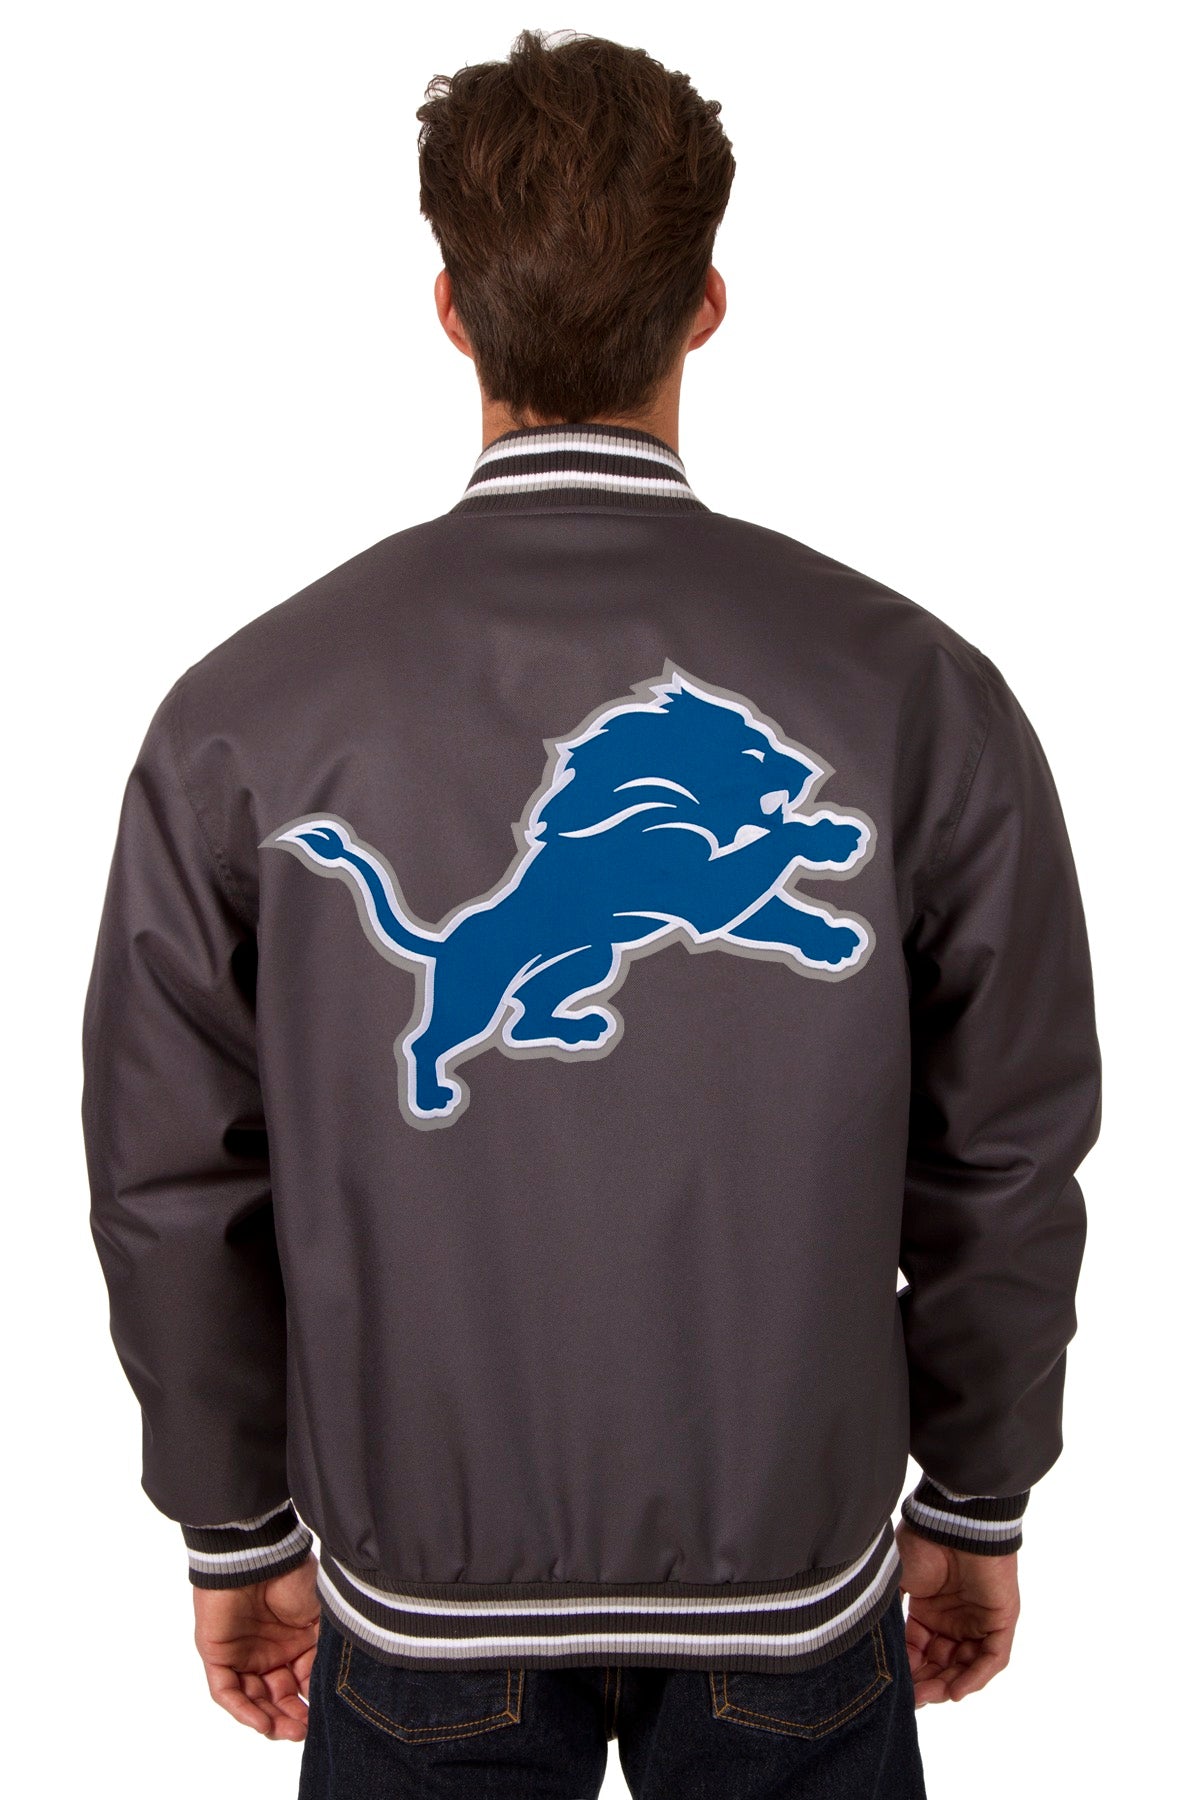 Detroit Lions Poly Twill Varsity Jacket - Charcoal | J.H. Sports Jackets